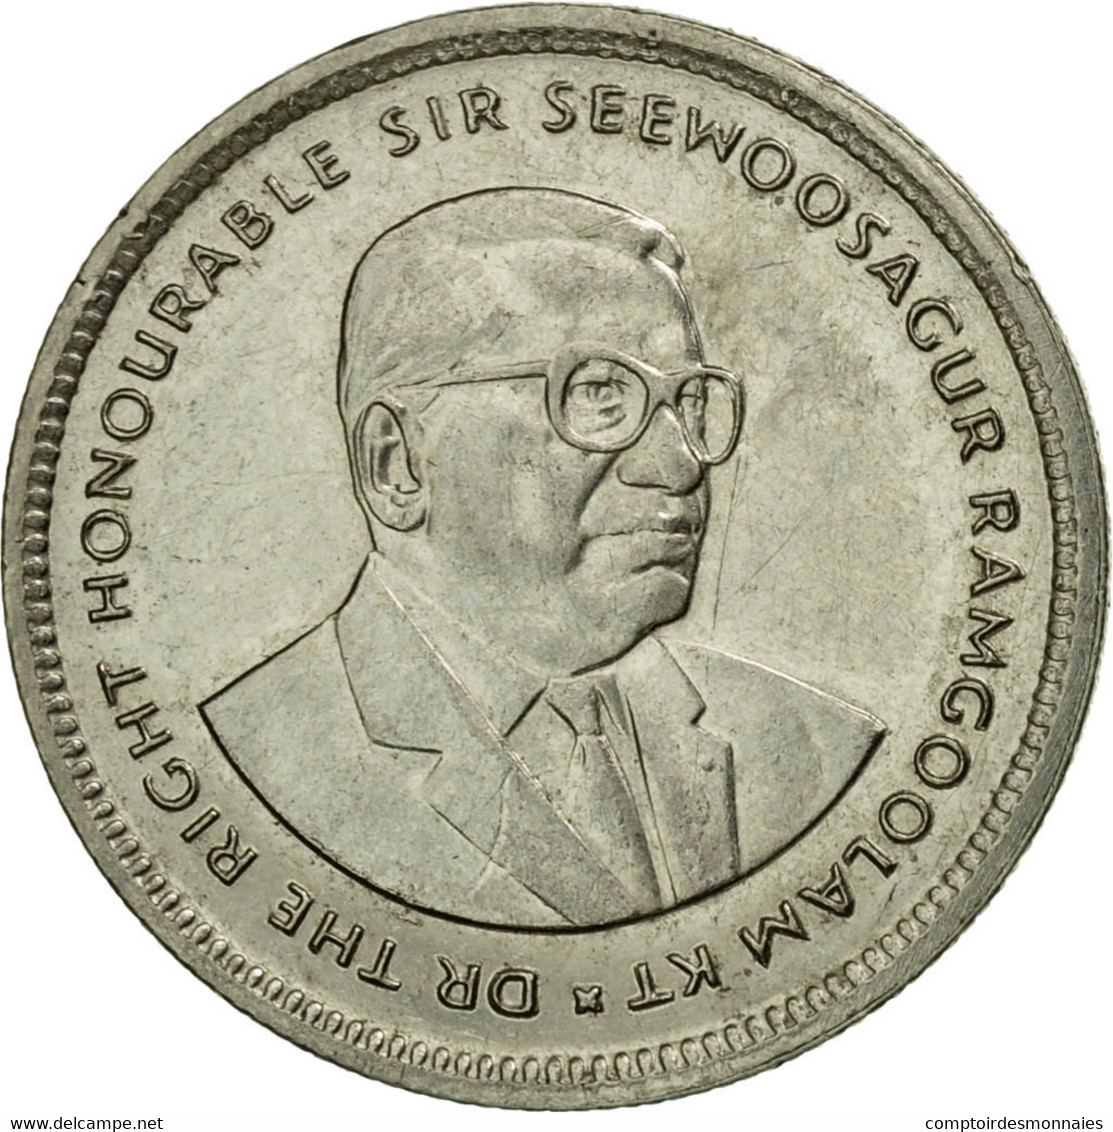 Monnaie, Mauritius, 20 Cents, 1993, TTB, Nickel Plated Steel, KM:53 - Maurice